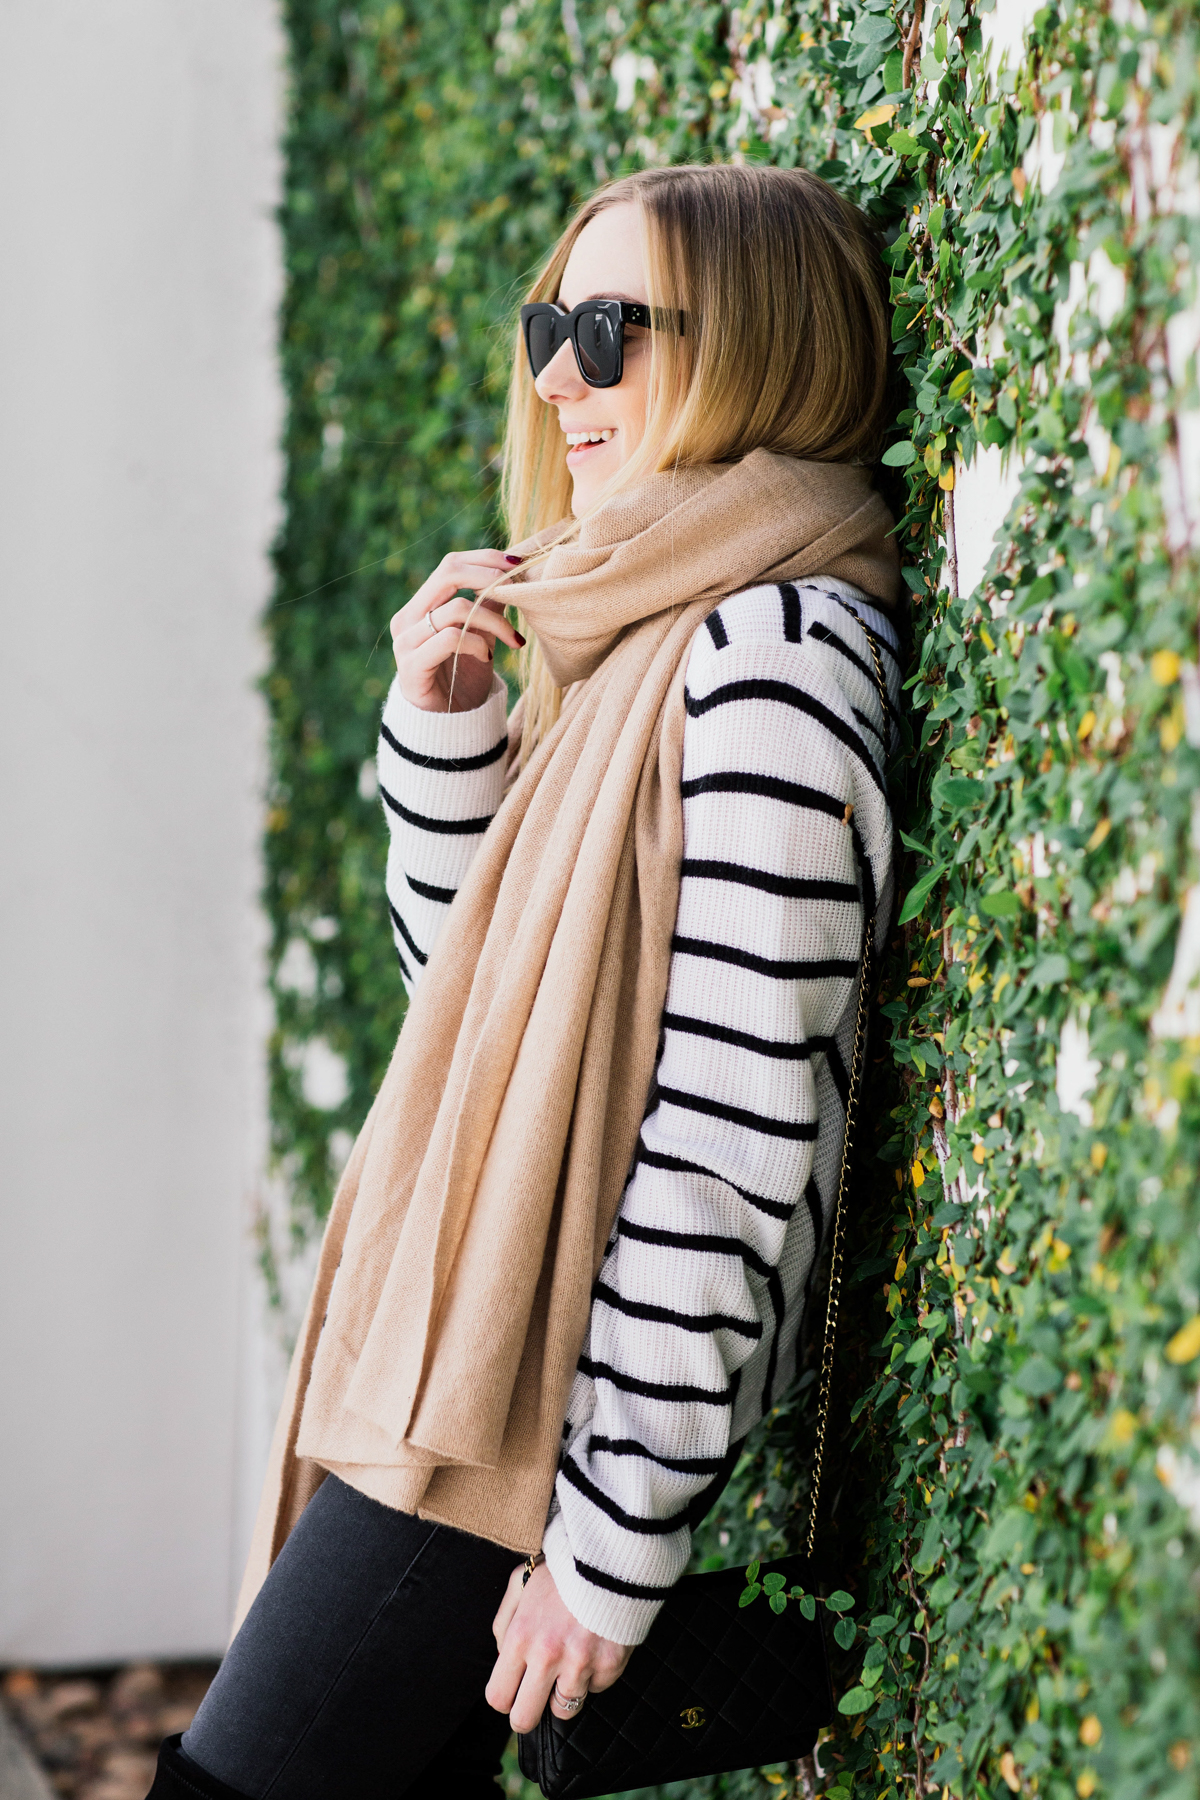 Stripes » eat.sleep.wear. – Fashion & Lifestyle Blog by Kimberly Lapides